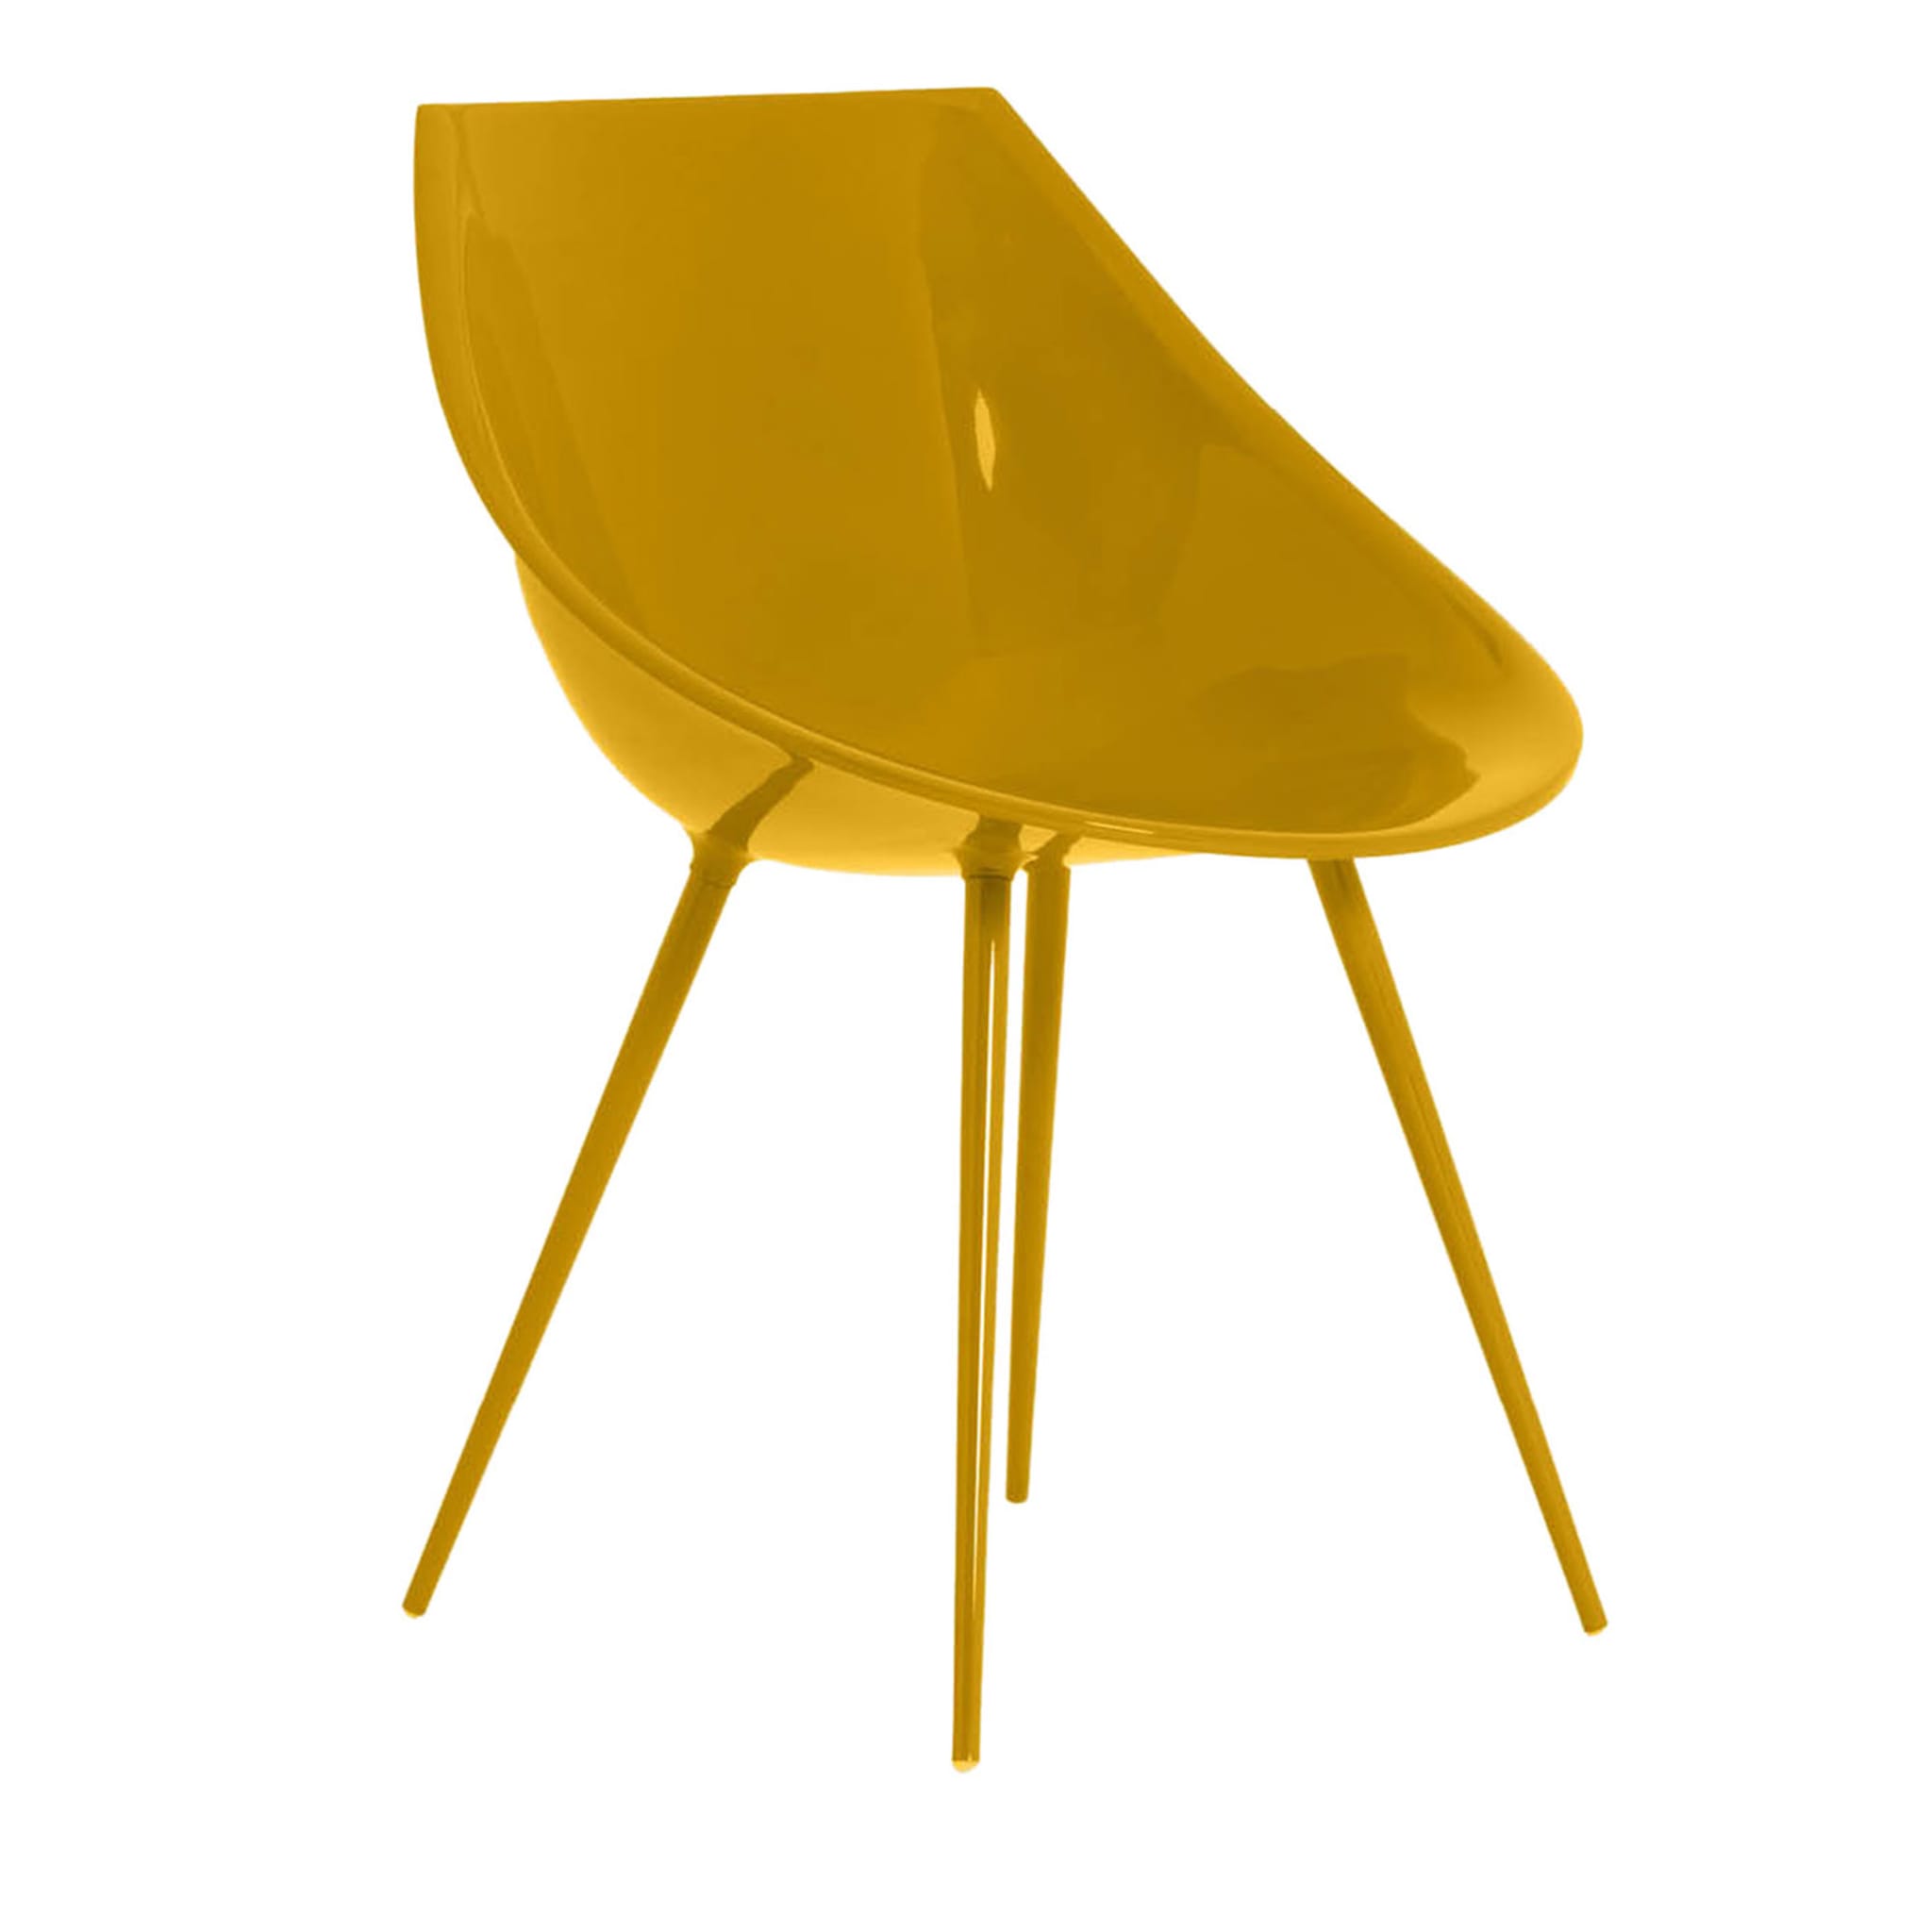 Lago' Saffron Chair by Philippe Starck - Main view